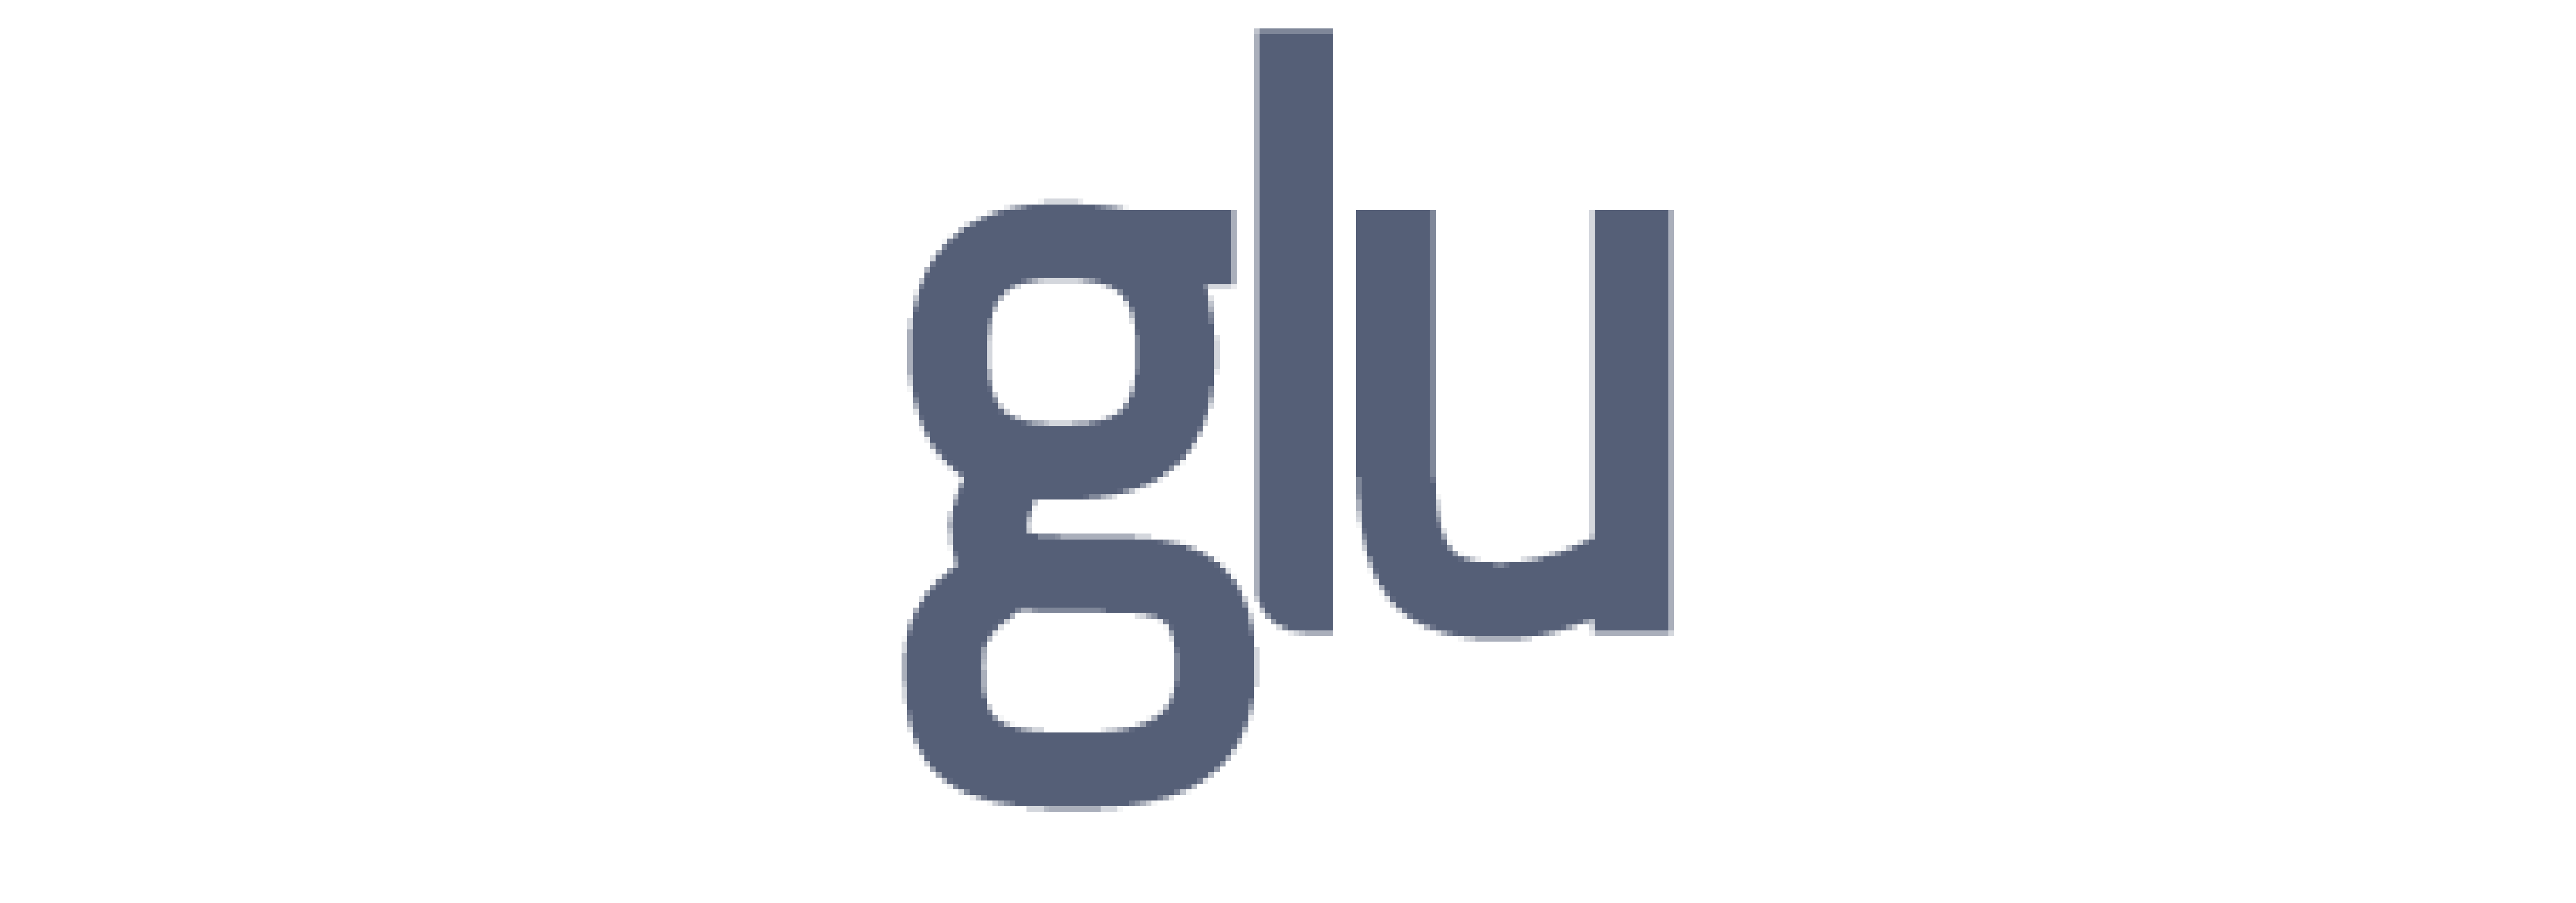 Glu_Mobile_logo_white-01-1